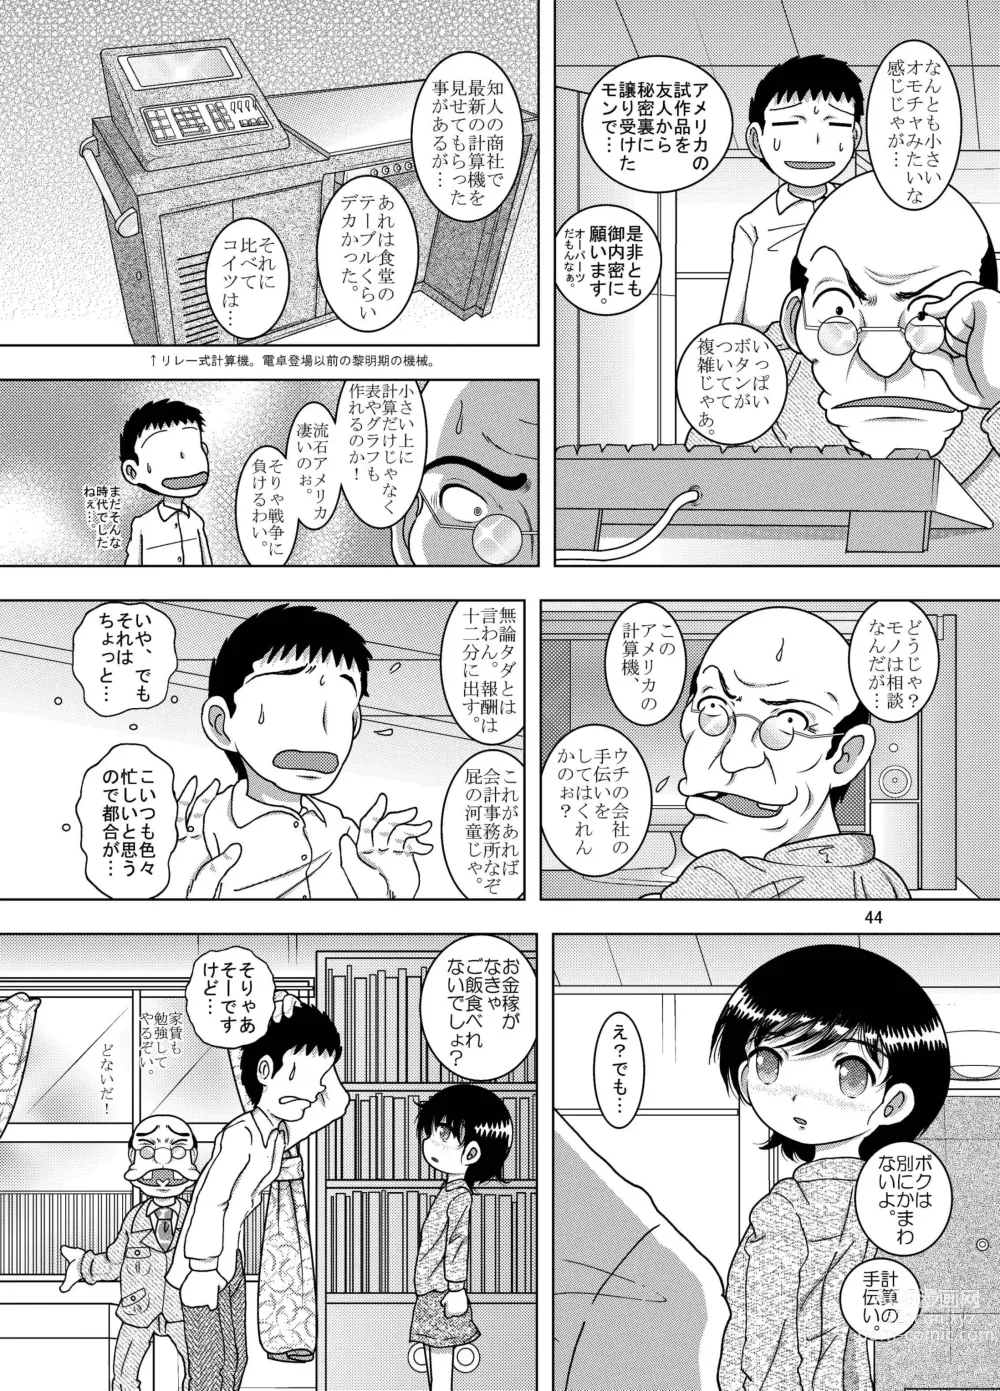 Page 44 of doujinshi Hoko Kankan